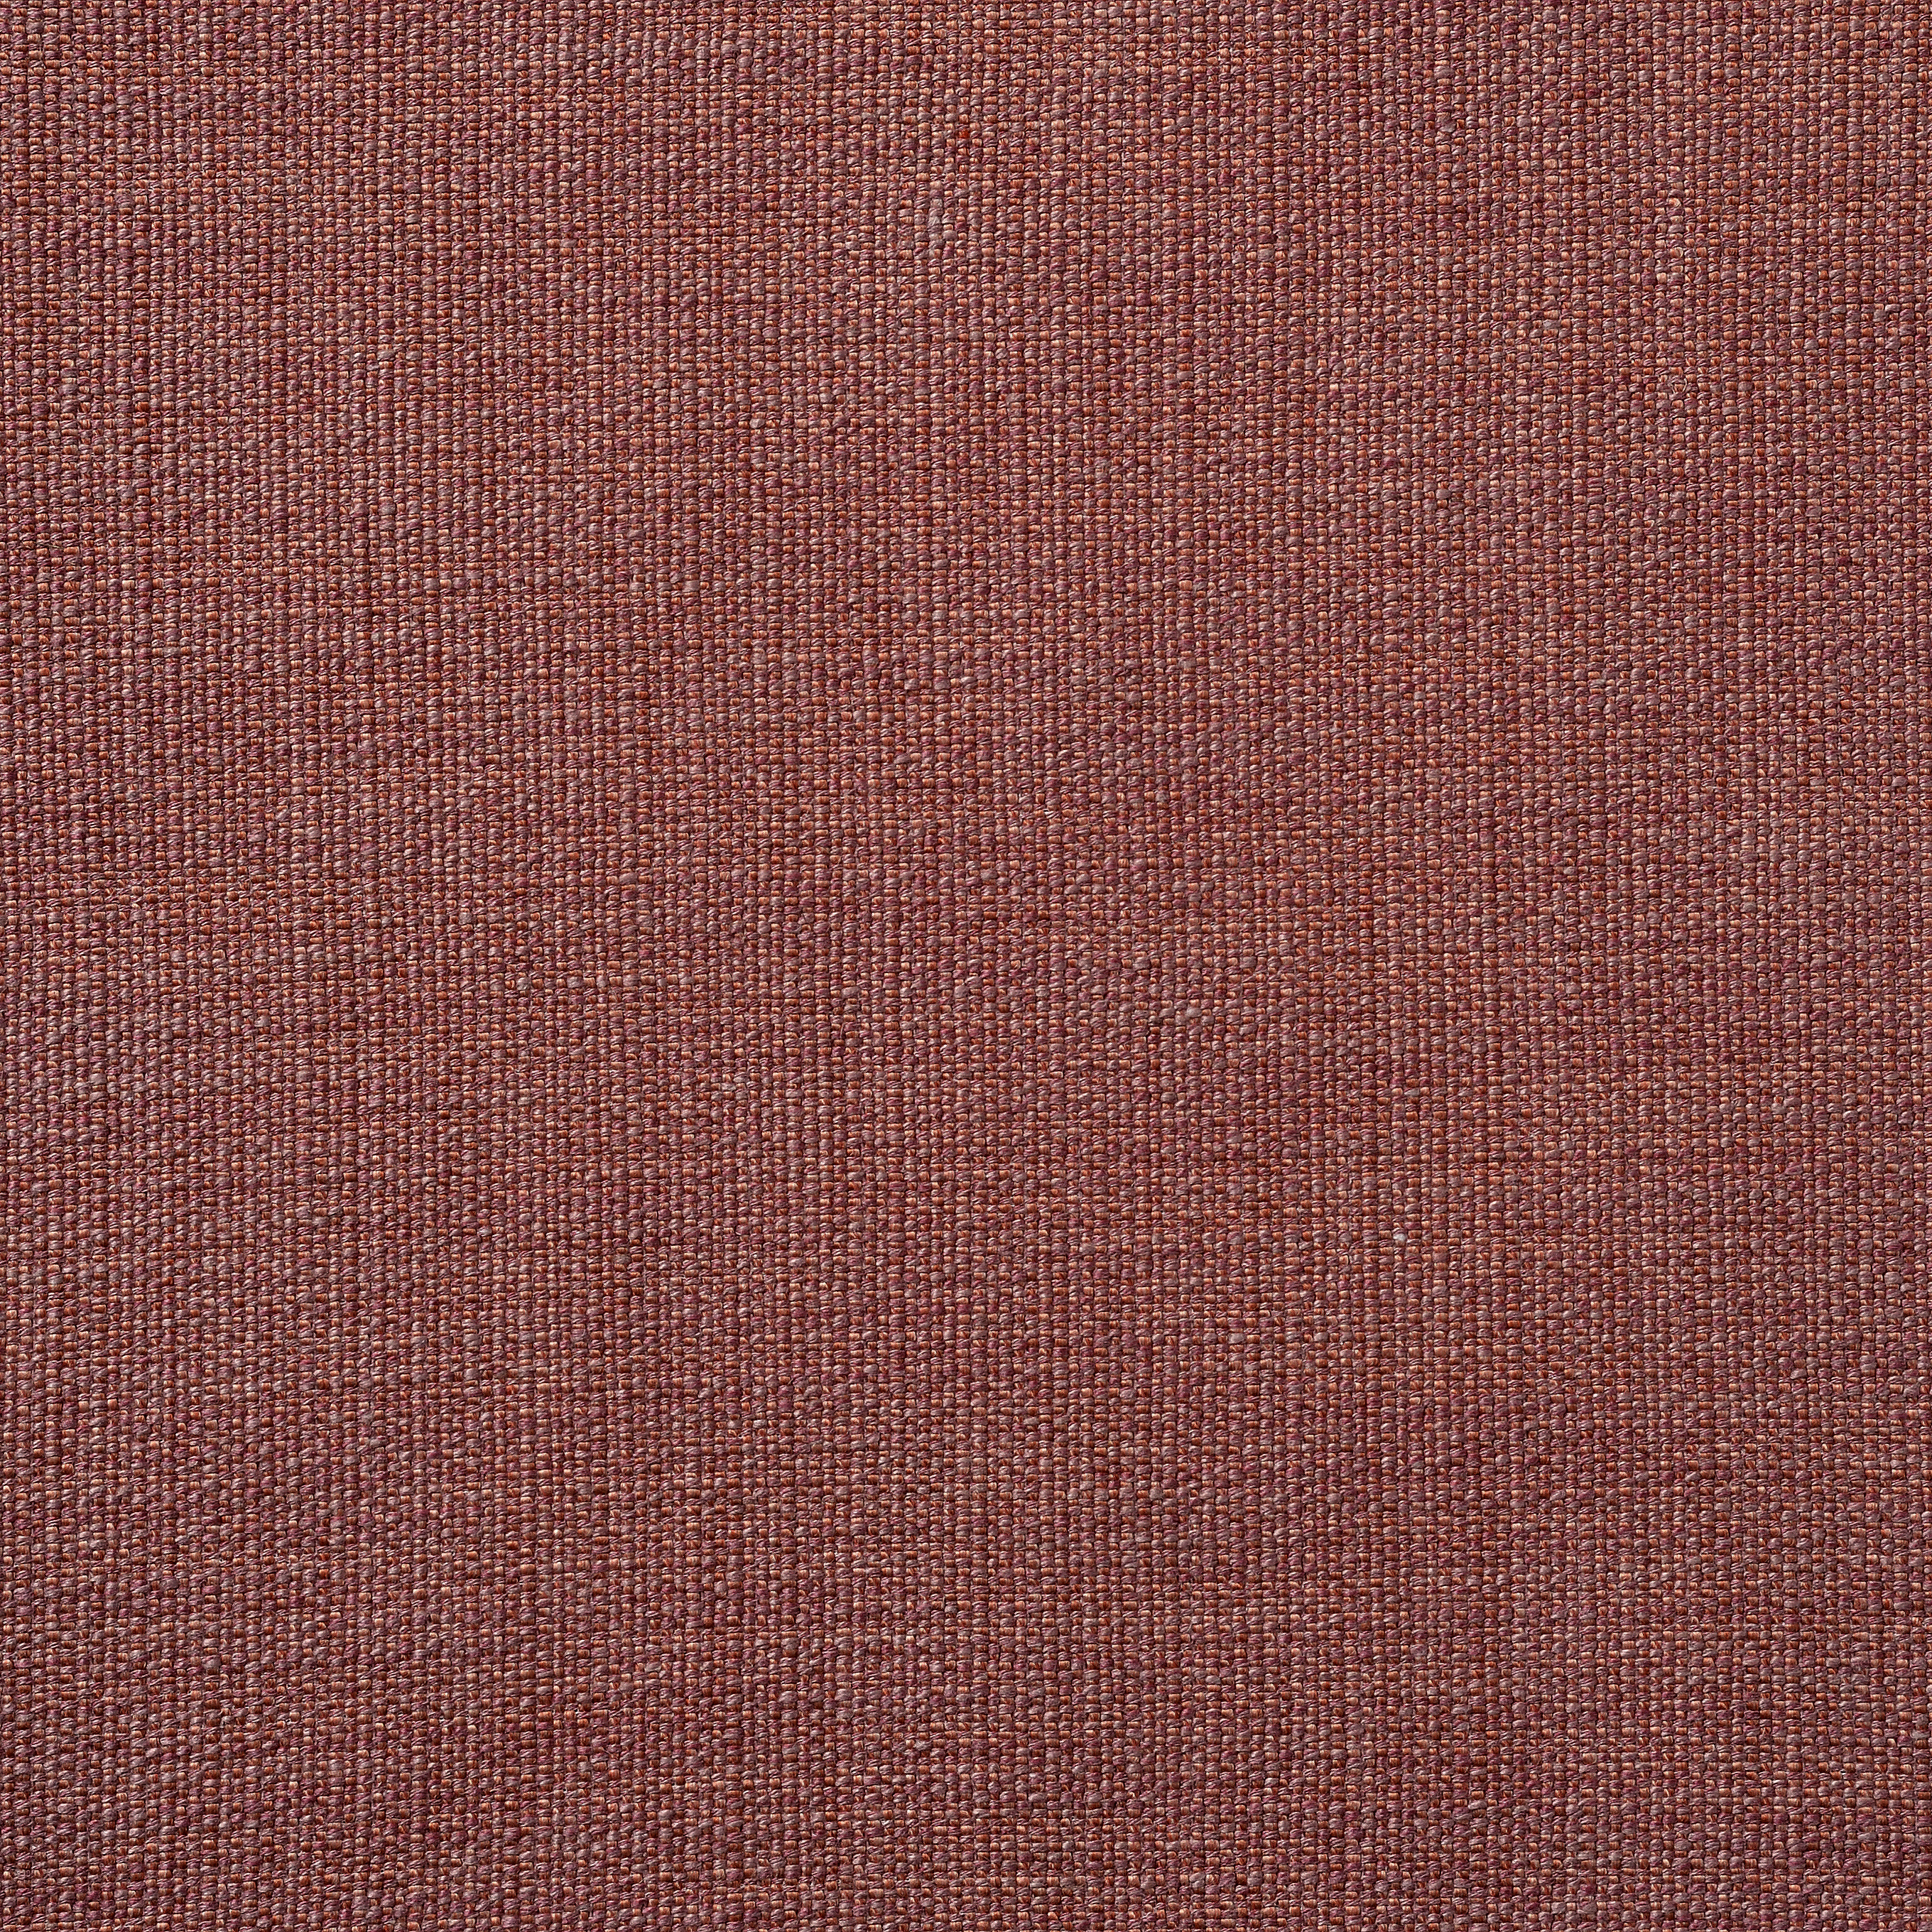 Mitford Rustic Weave - Blush Marl